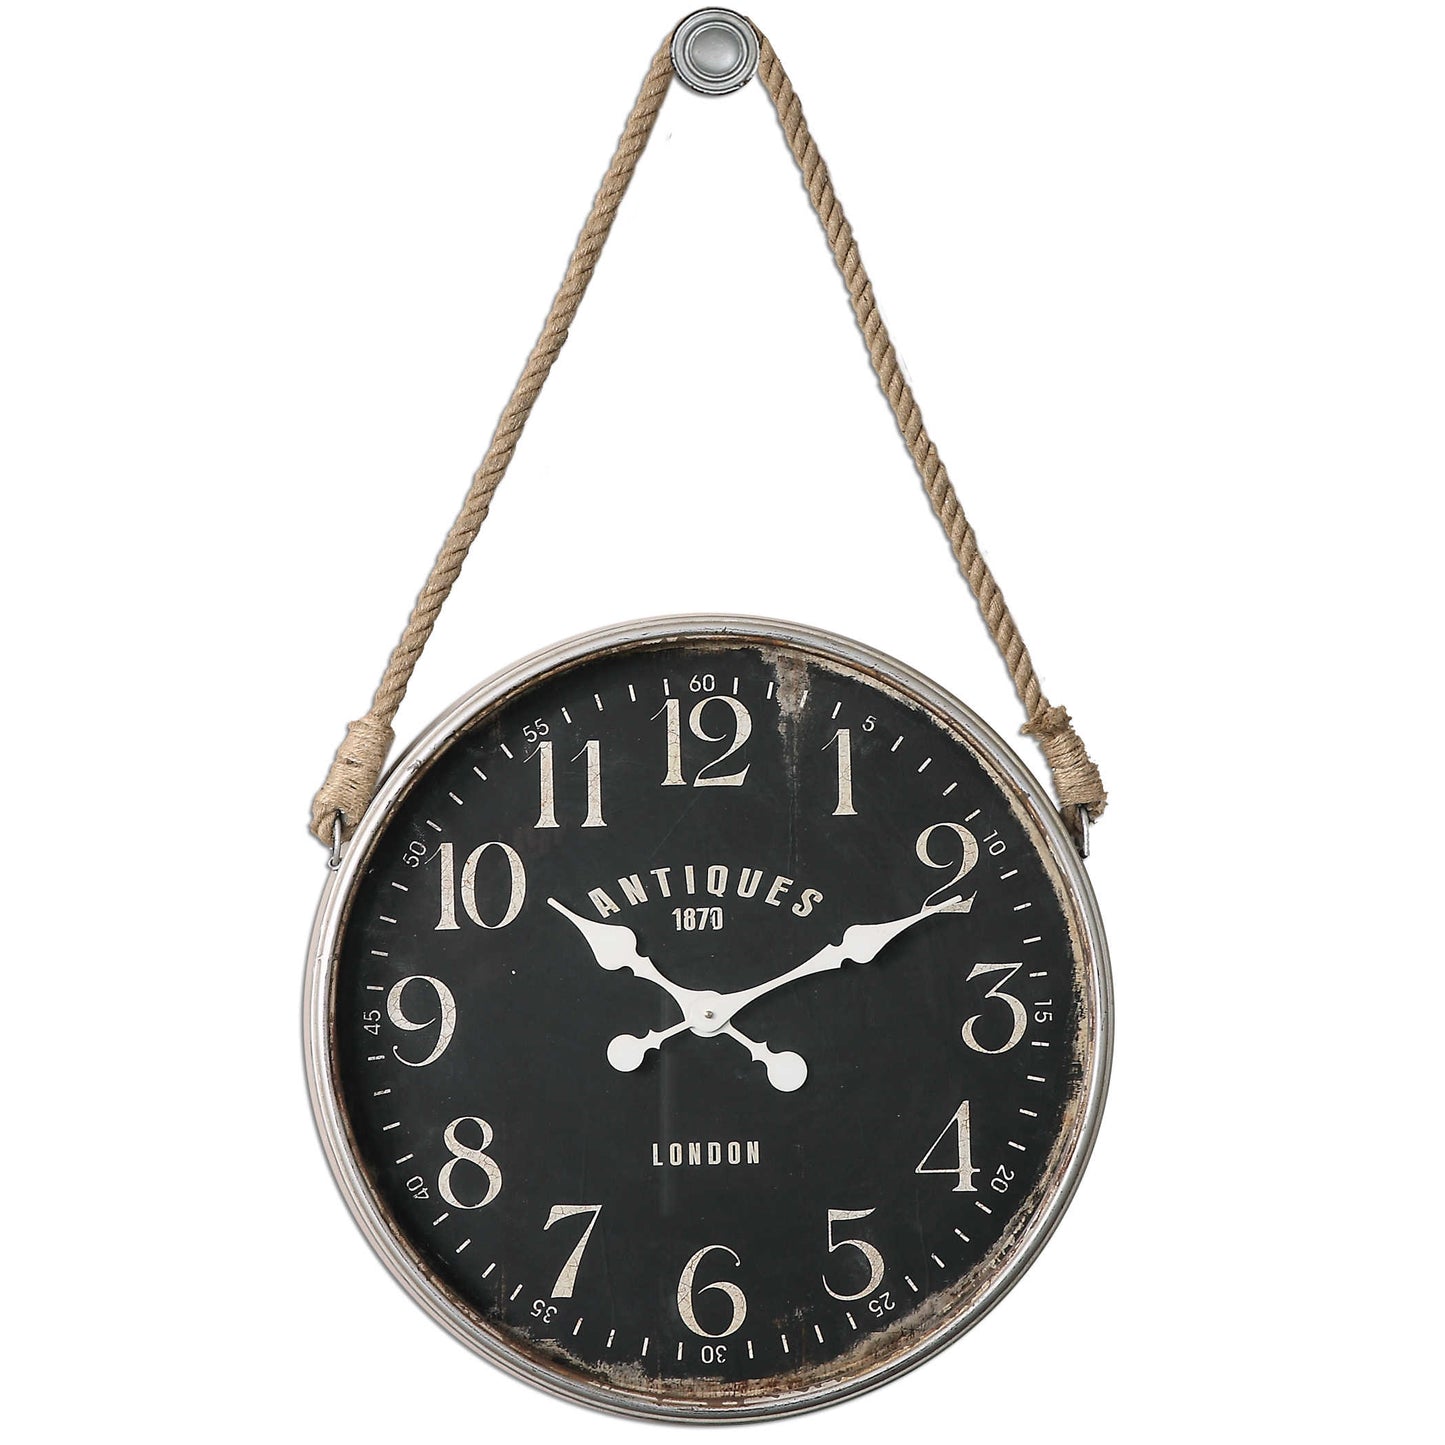 The Bartram Wall Clock